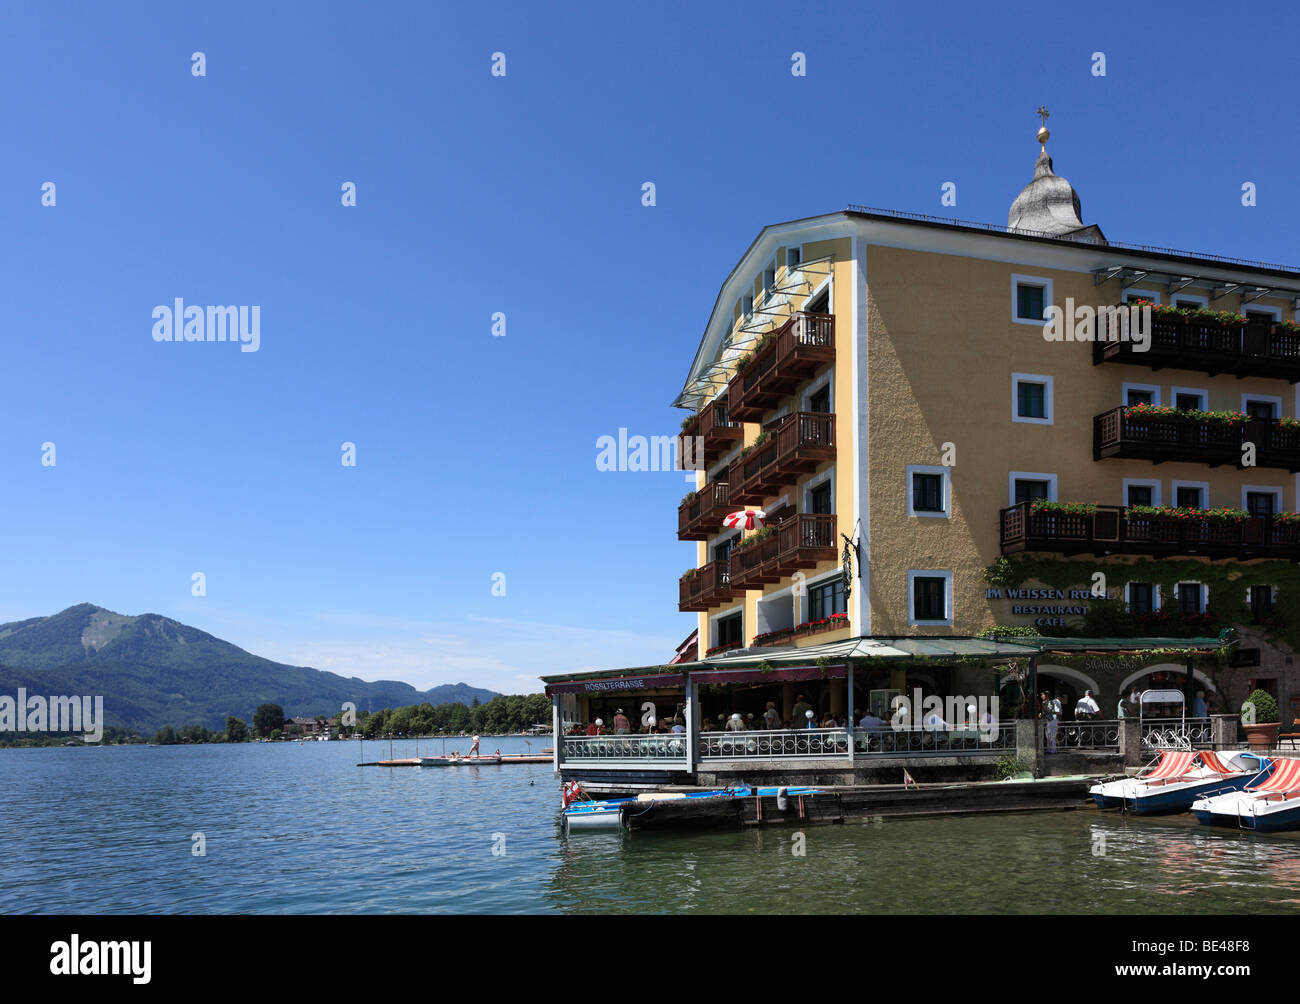 Hotel Weisses Roessl, St. Wolfgang, Wolfgangsee lake, Salzkammergut region, Upper Austria, Austria, Europe Stock Photo